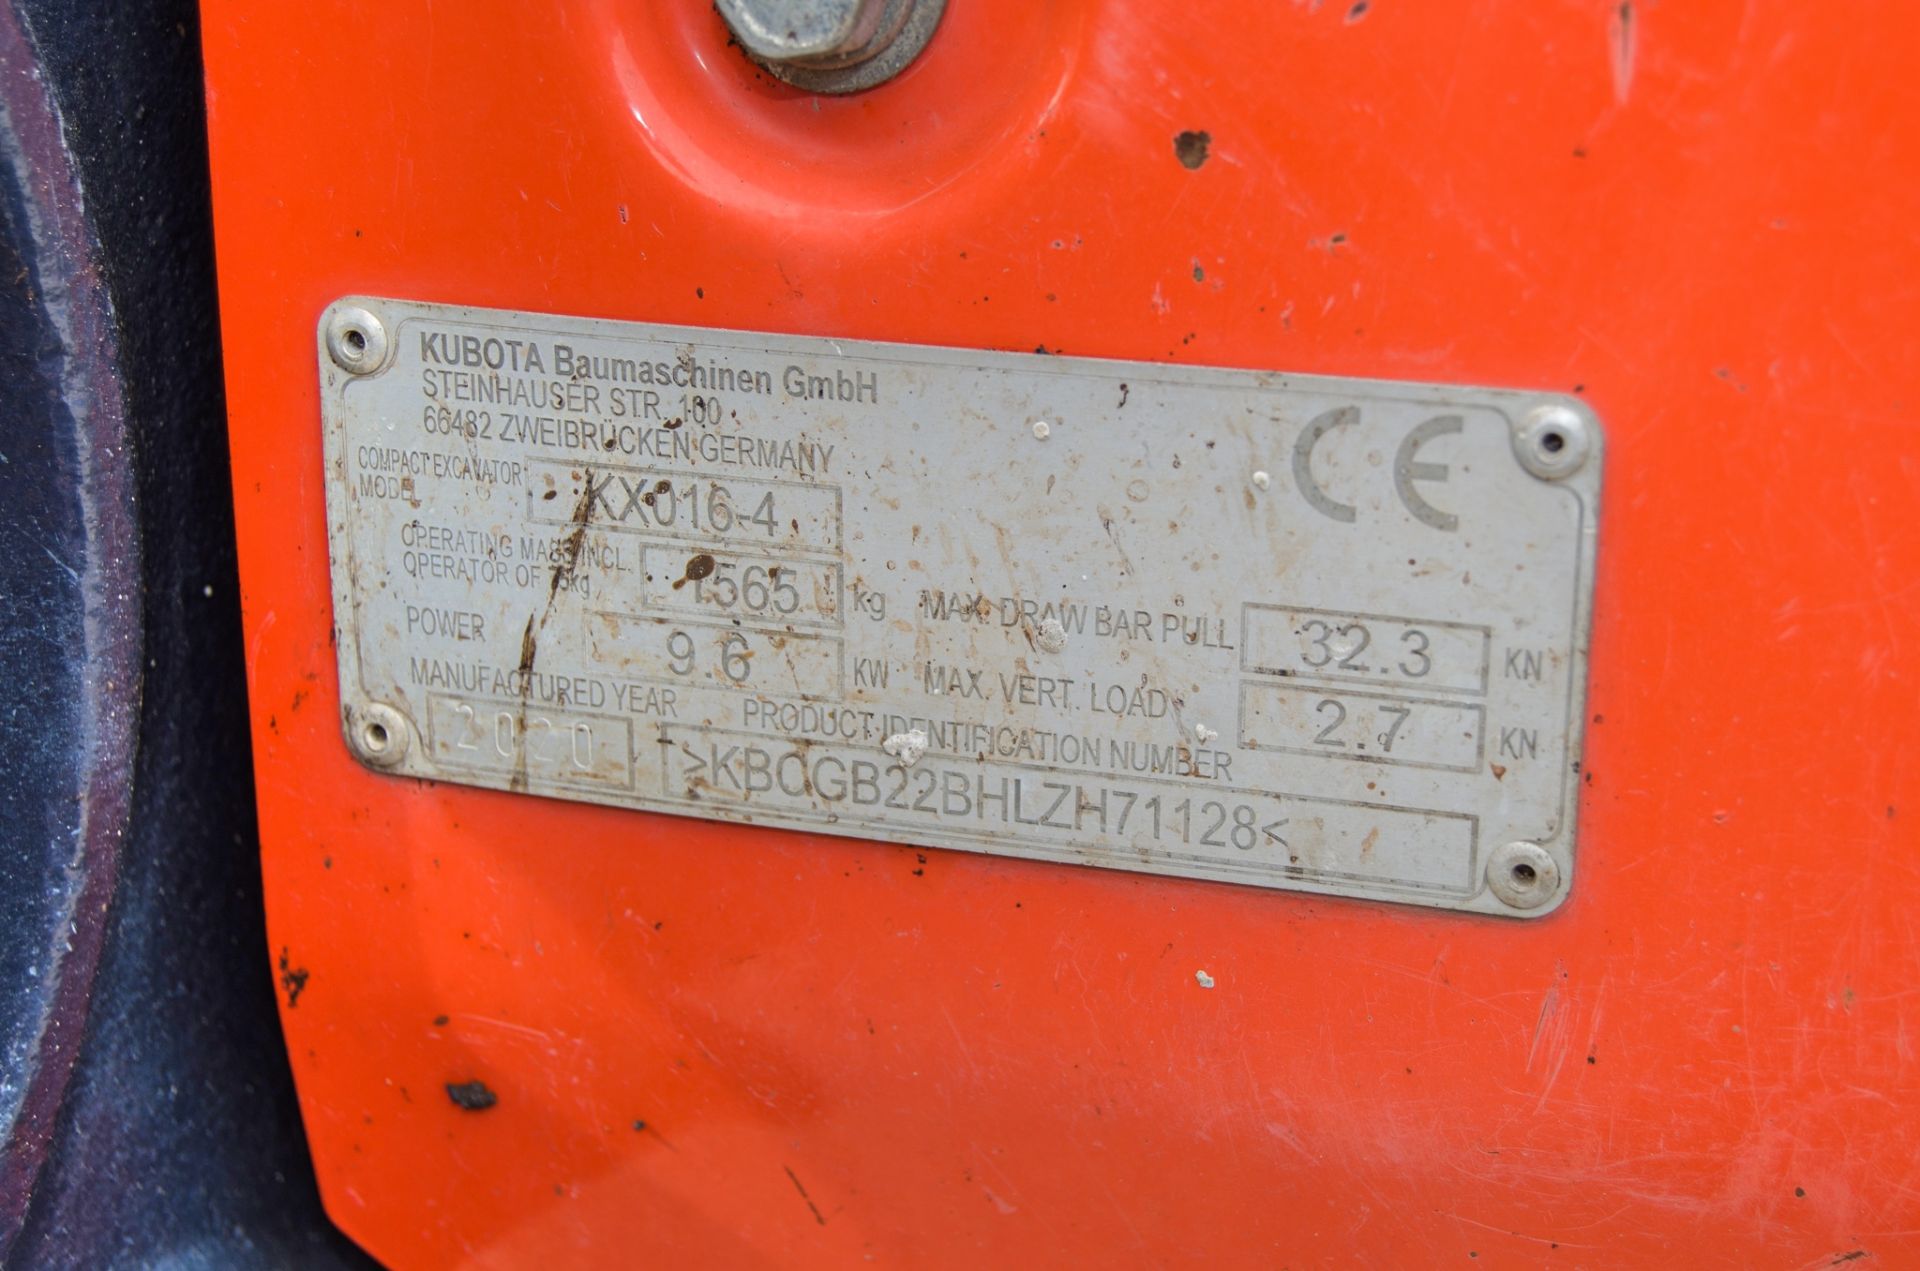 Kubota KX016-4 1.5 tonne rubber tracked mini excavator Year: 2020 S/N: LZH71128 Recorded Hours: 1130 - Bild 26 aus 26